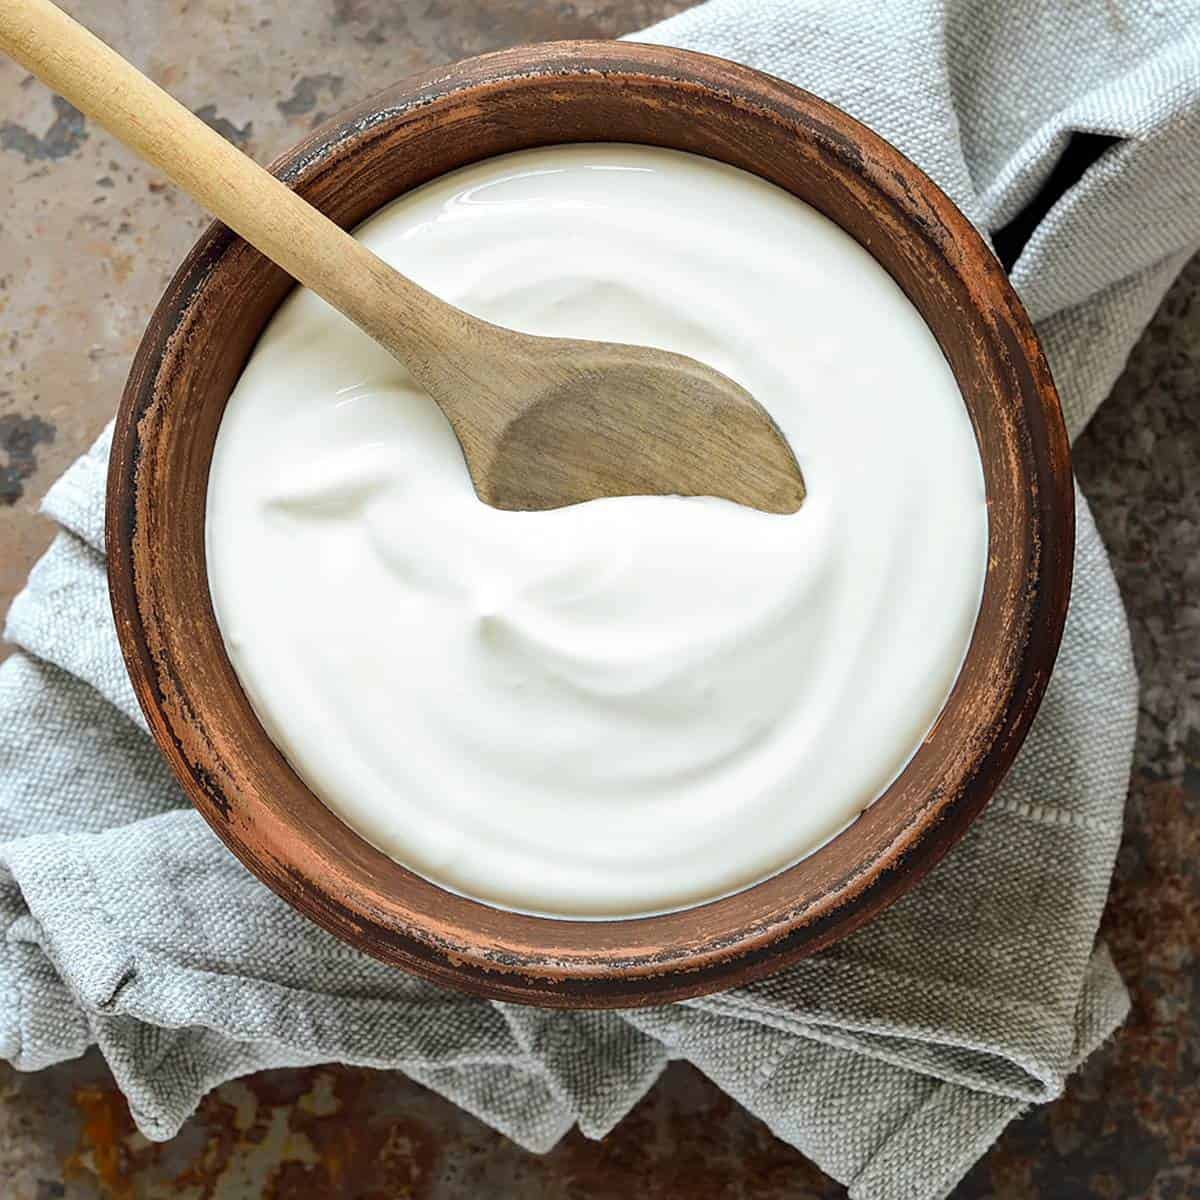 How To Make Yogurt - The Daring Gourmet